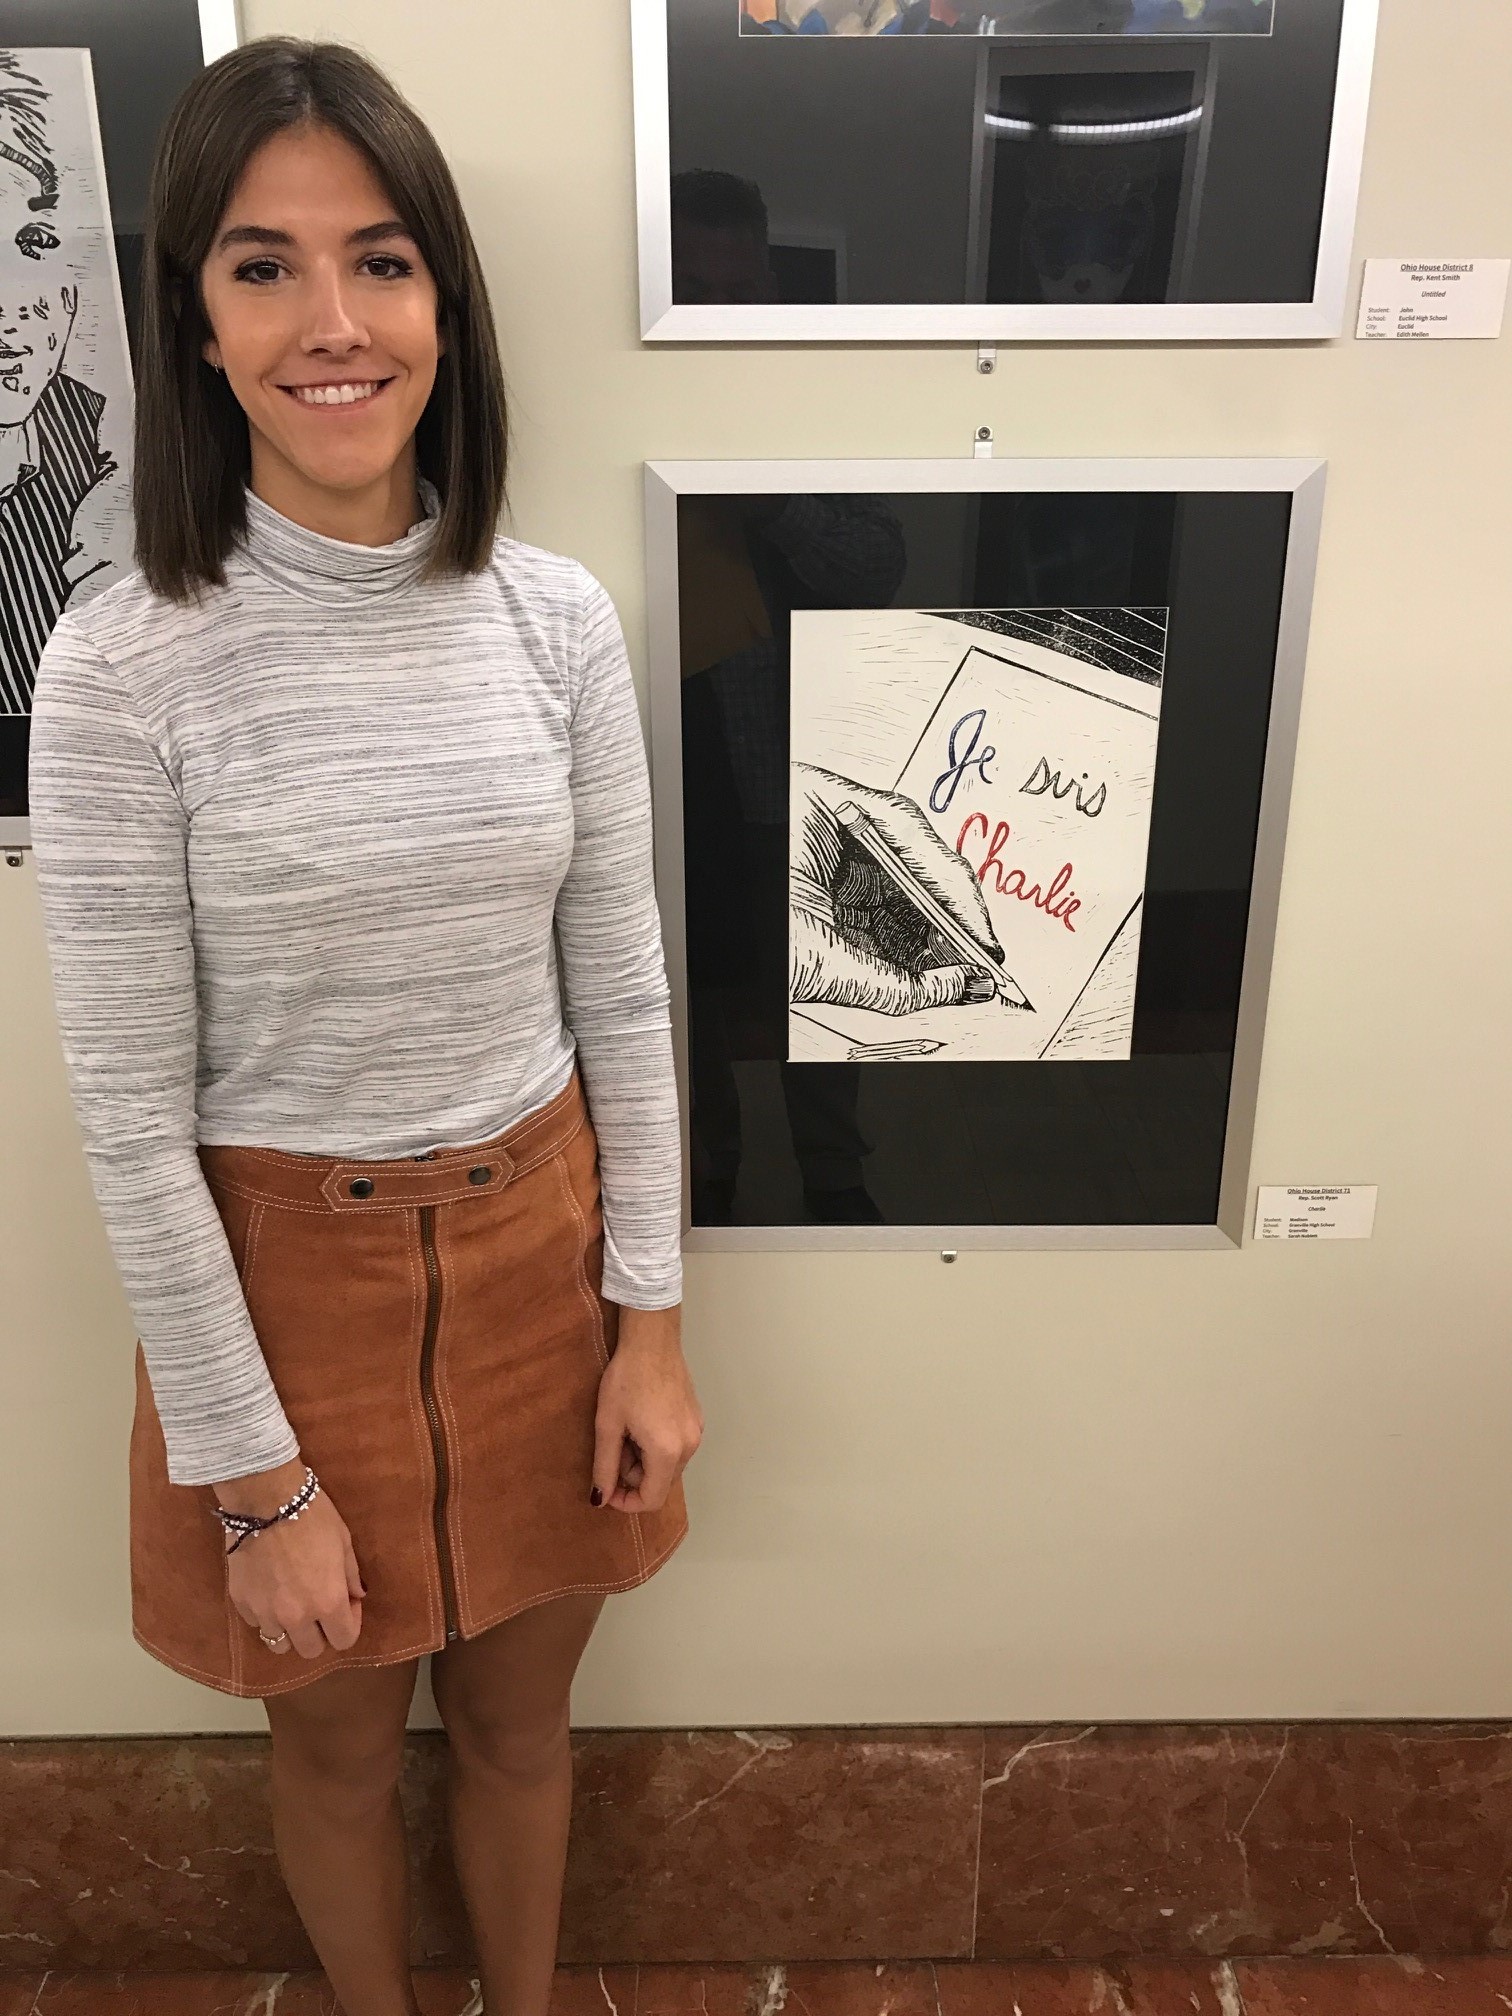 Madison Koester's Art Displayed at Ohio Statehouse